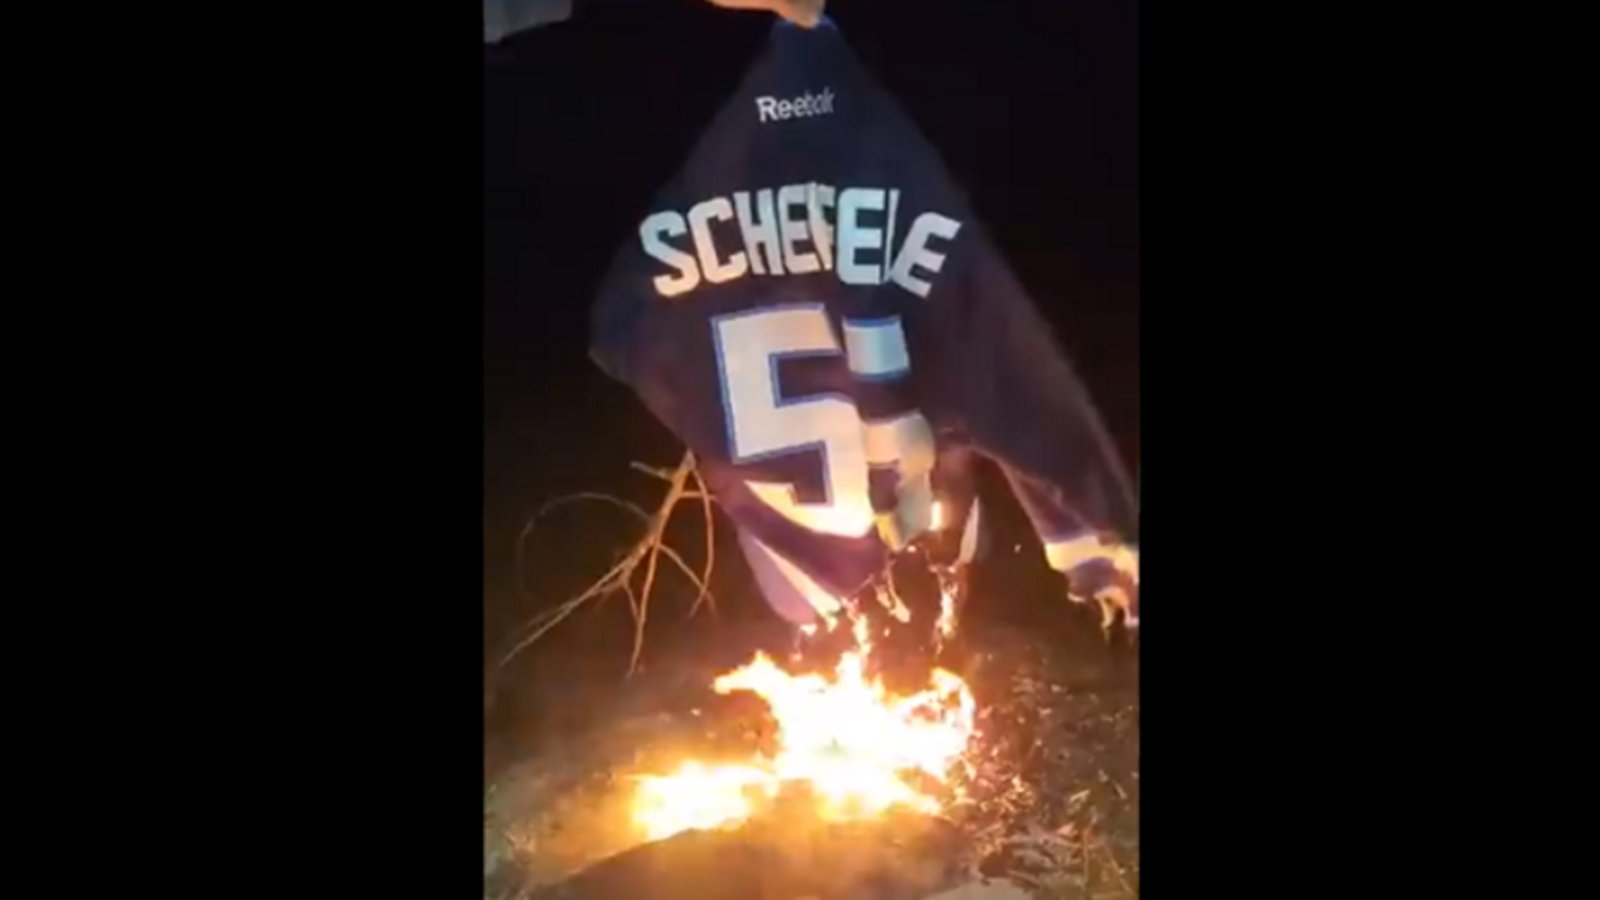 Fan burns his Mark Scheifele jersey after last night's devastating hit on Jake Evans